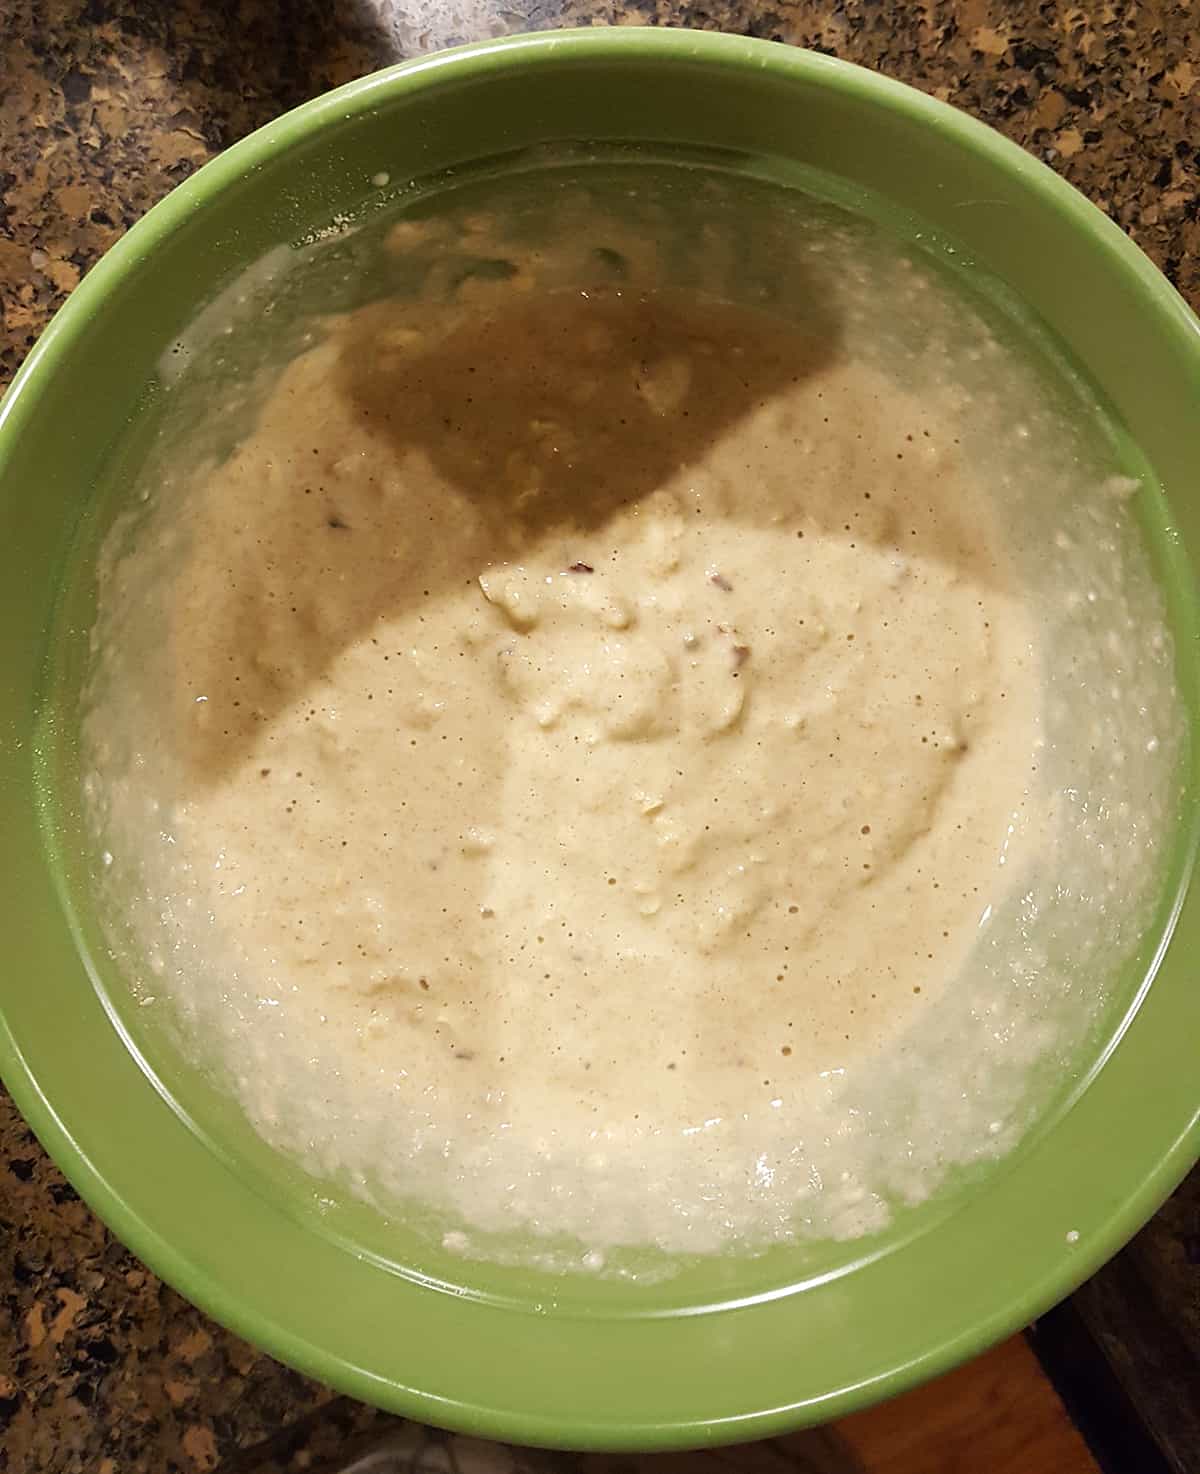 Medium bowl containing mixed batter for pancakes.